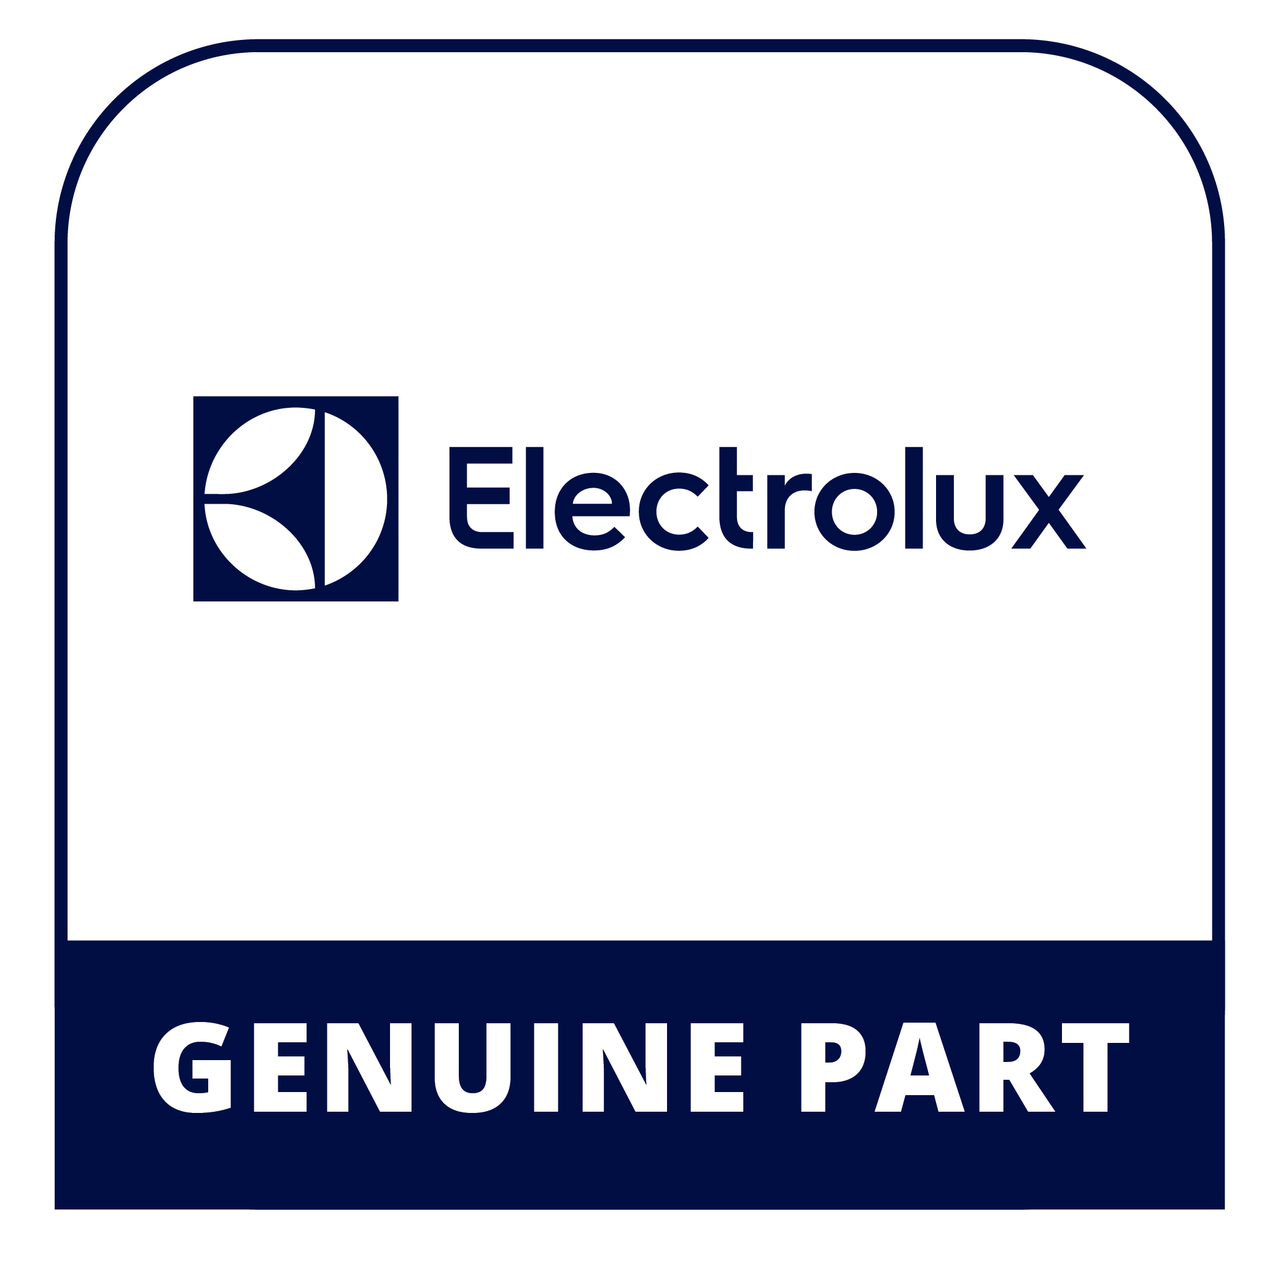 Frigidaire - Electrolux 134075500 Bumper - Genuine Electrolux Part